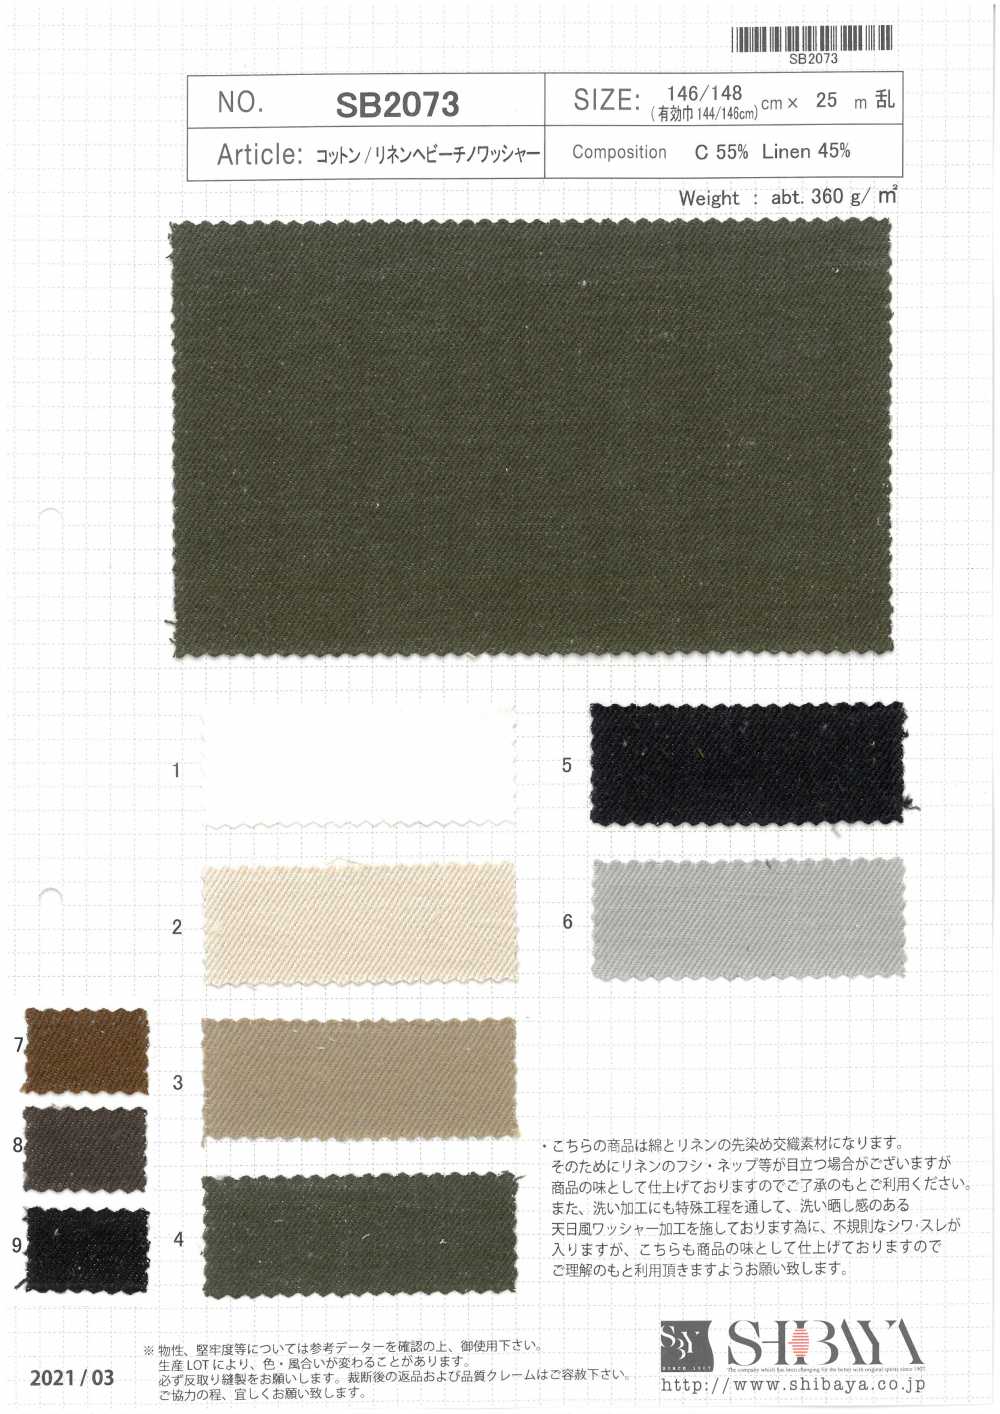 SB2073 [OUTLET] Coton/lin Heavy Chino Washer Processing[Fabrication De Textile] SHIBAYA